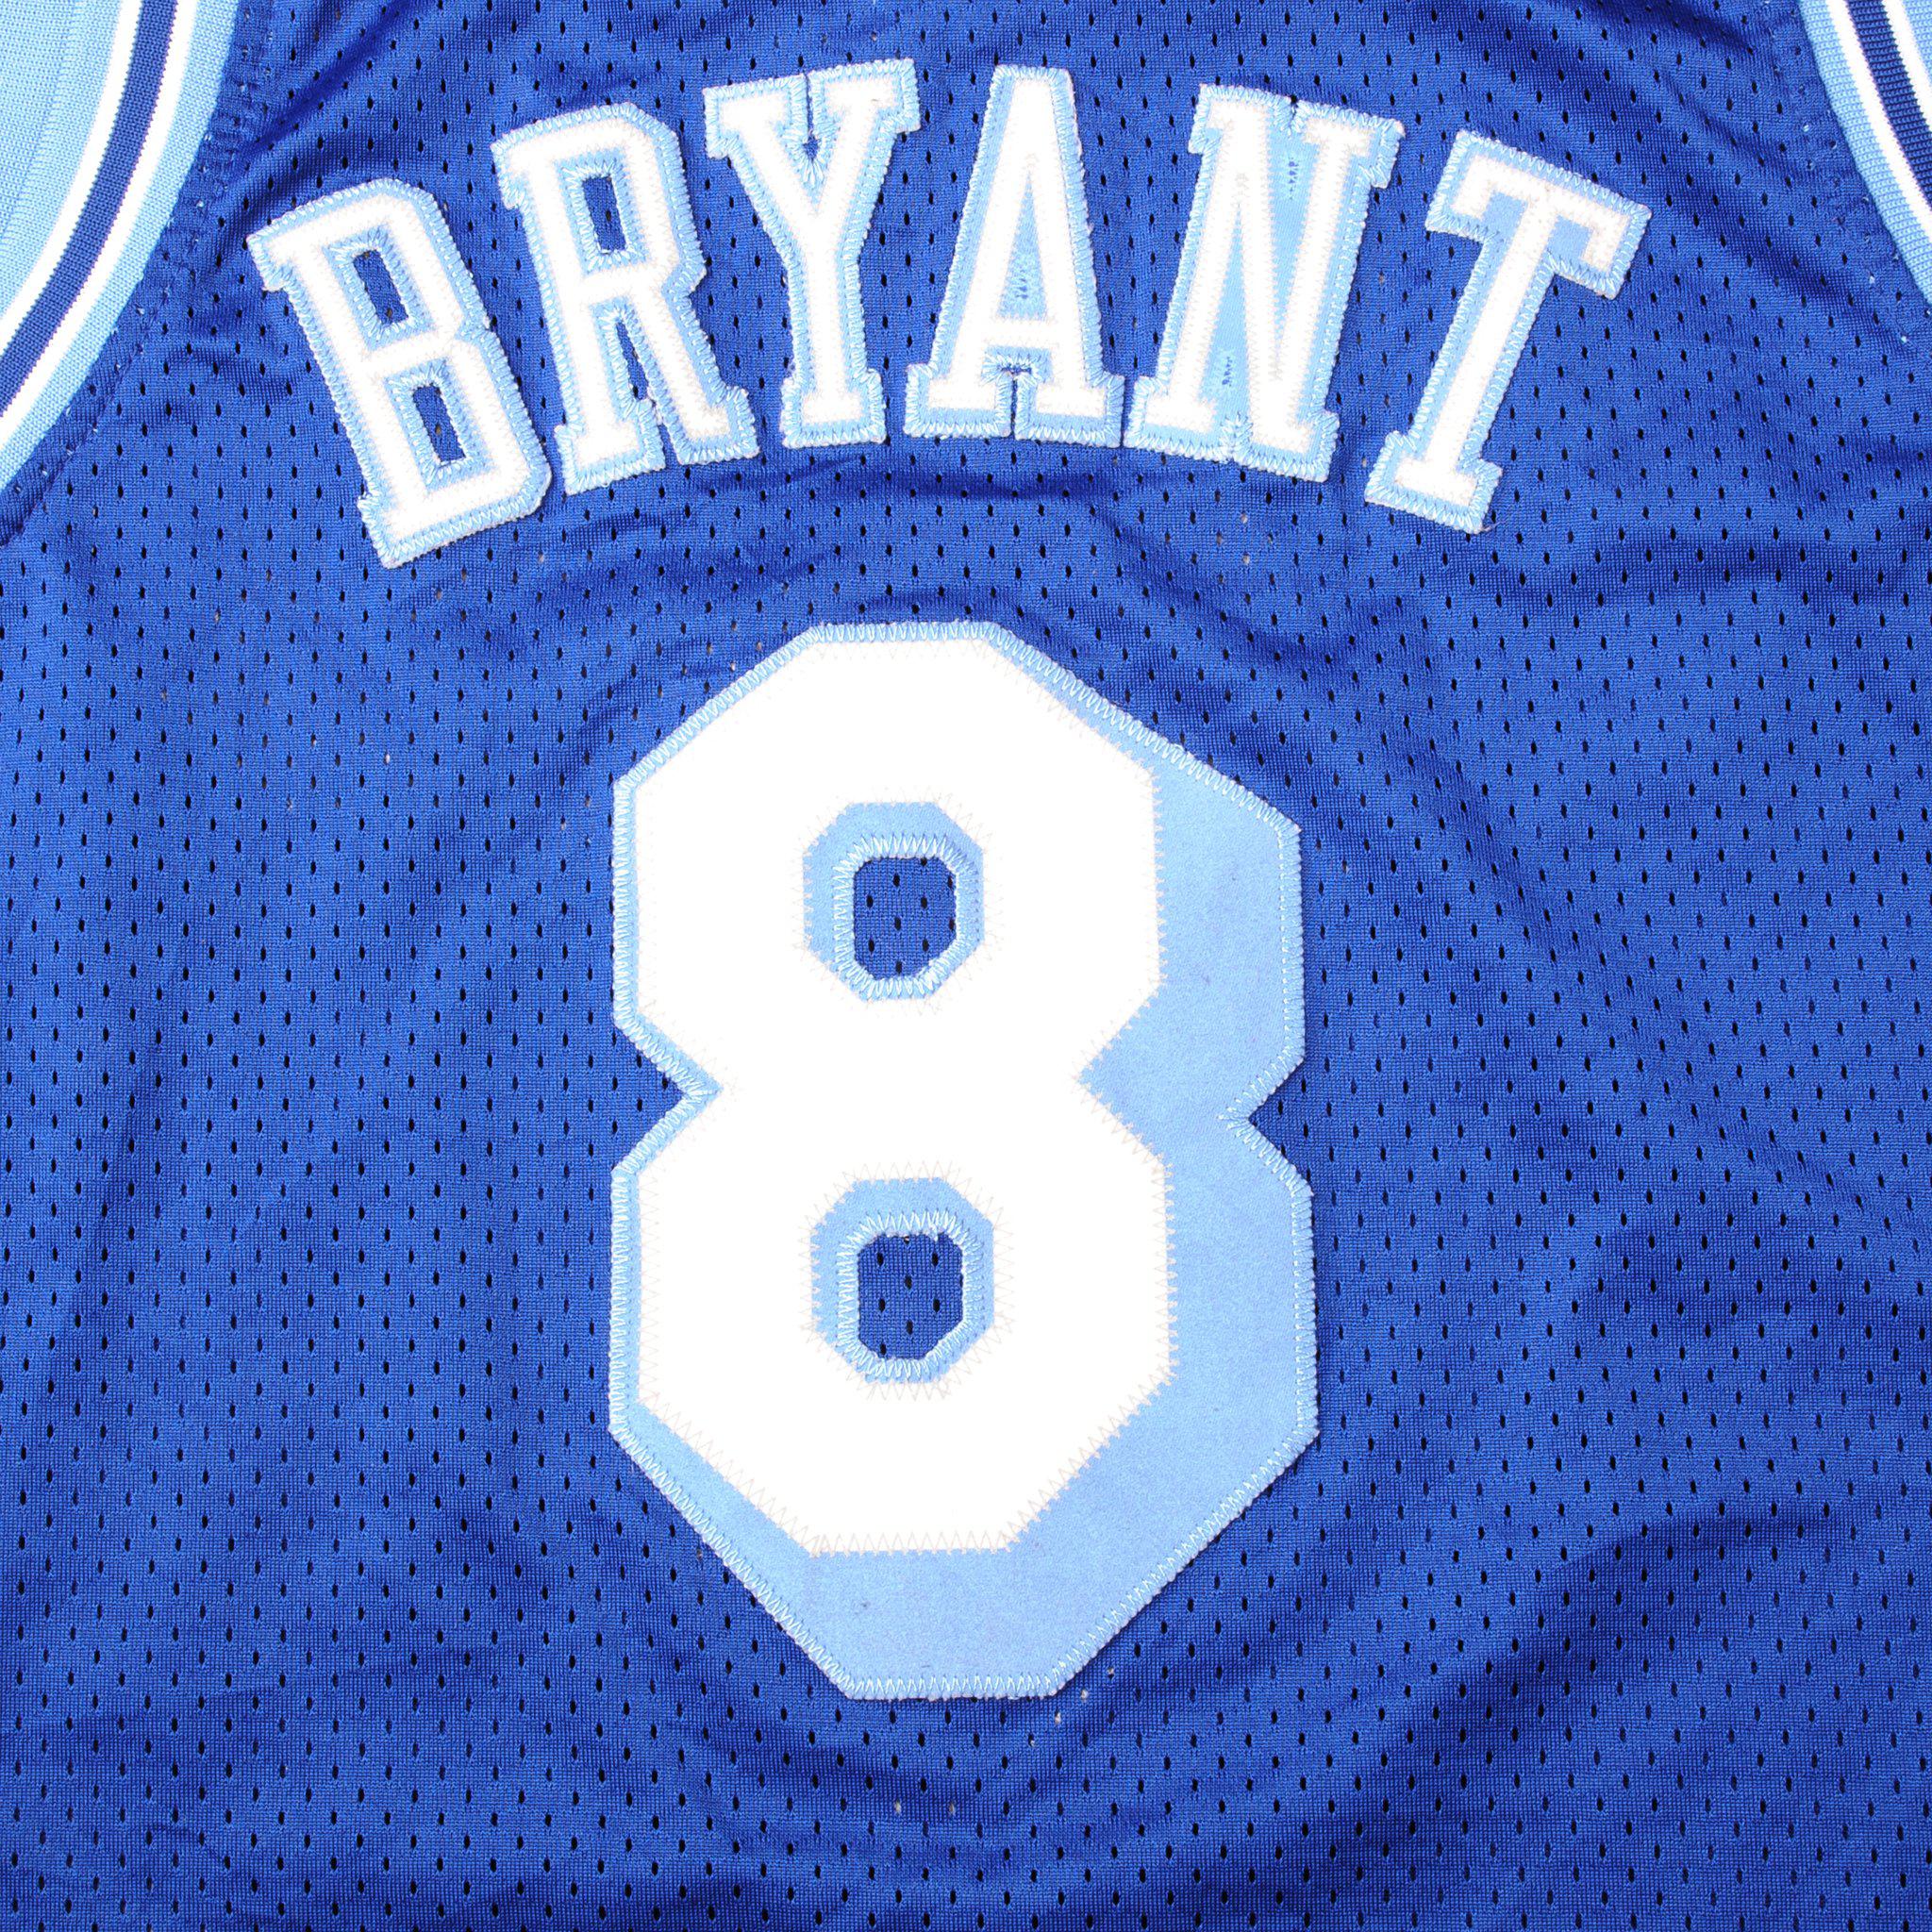 Kobe Bryant 8 Team USA White Basketball Jersey